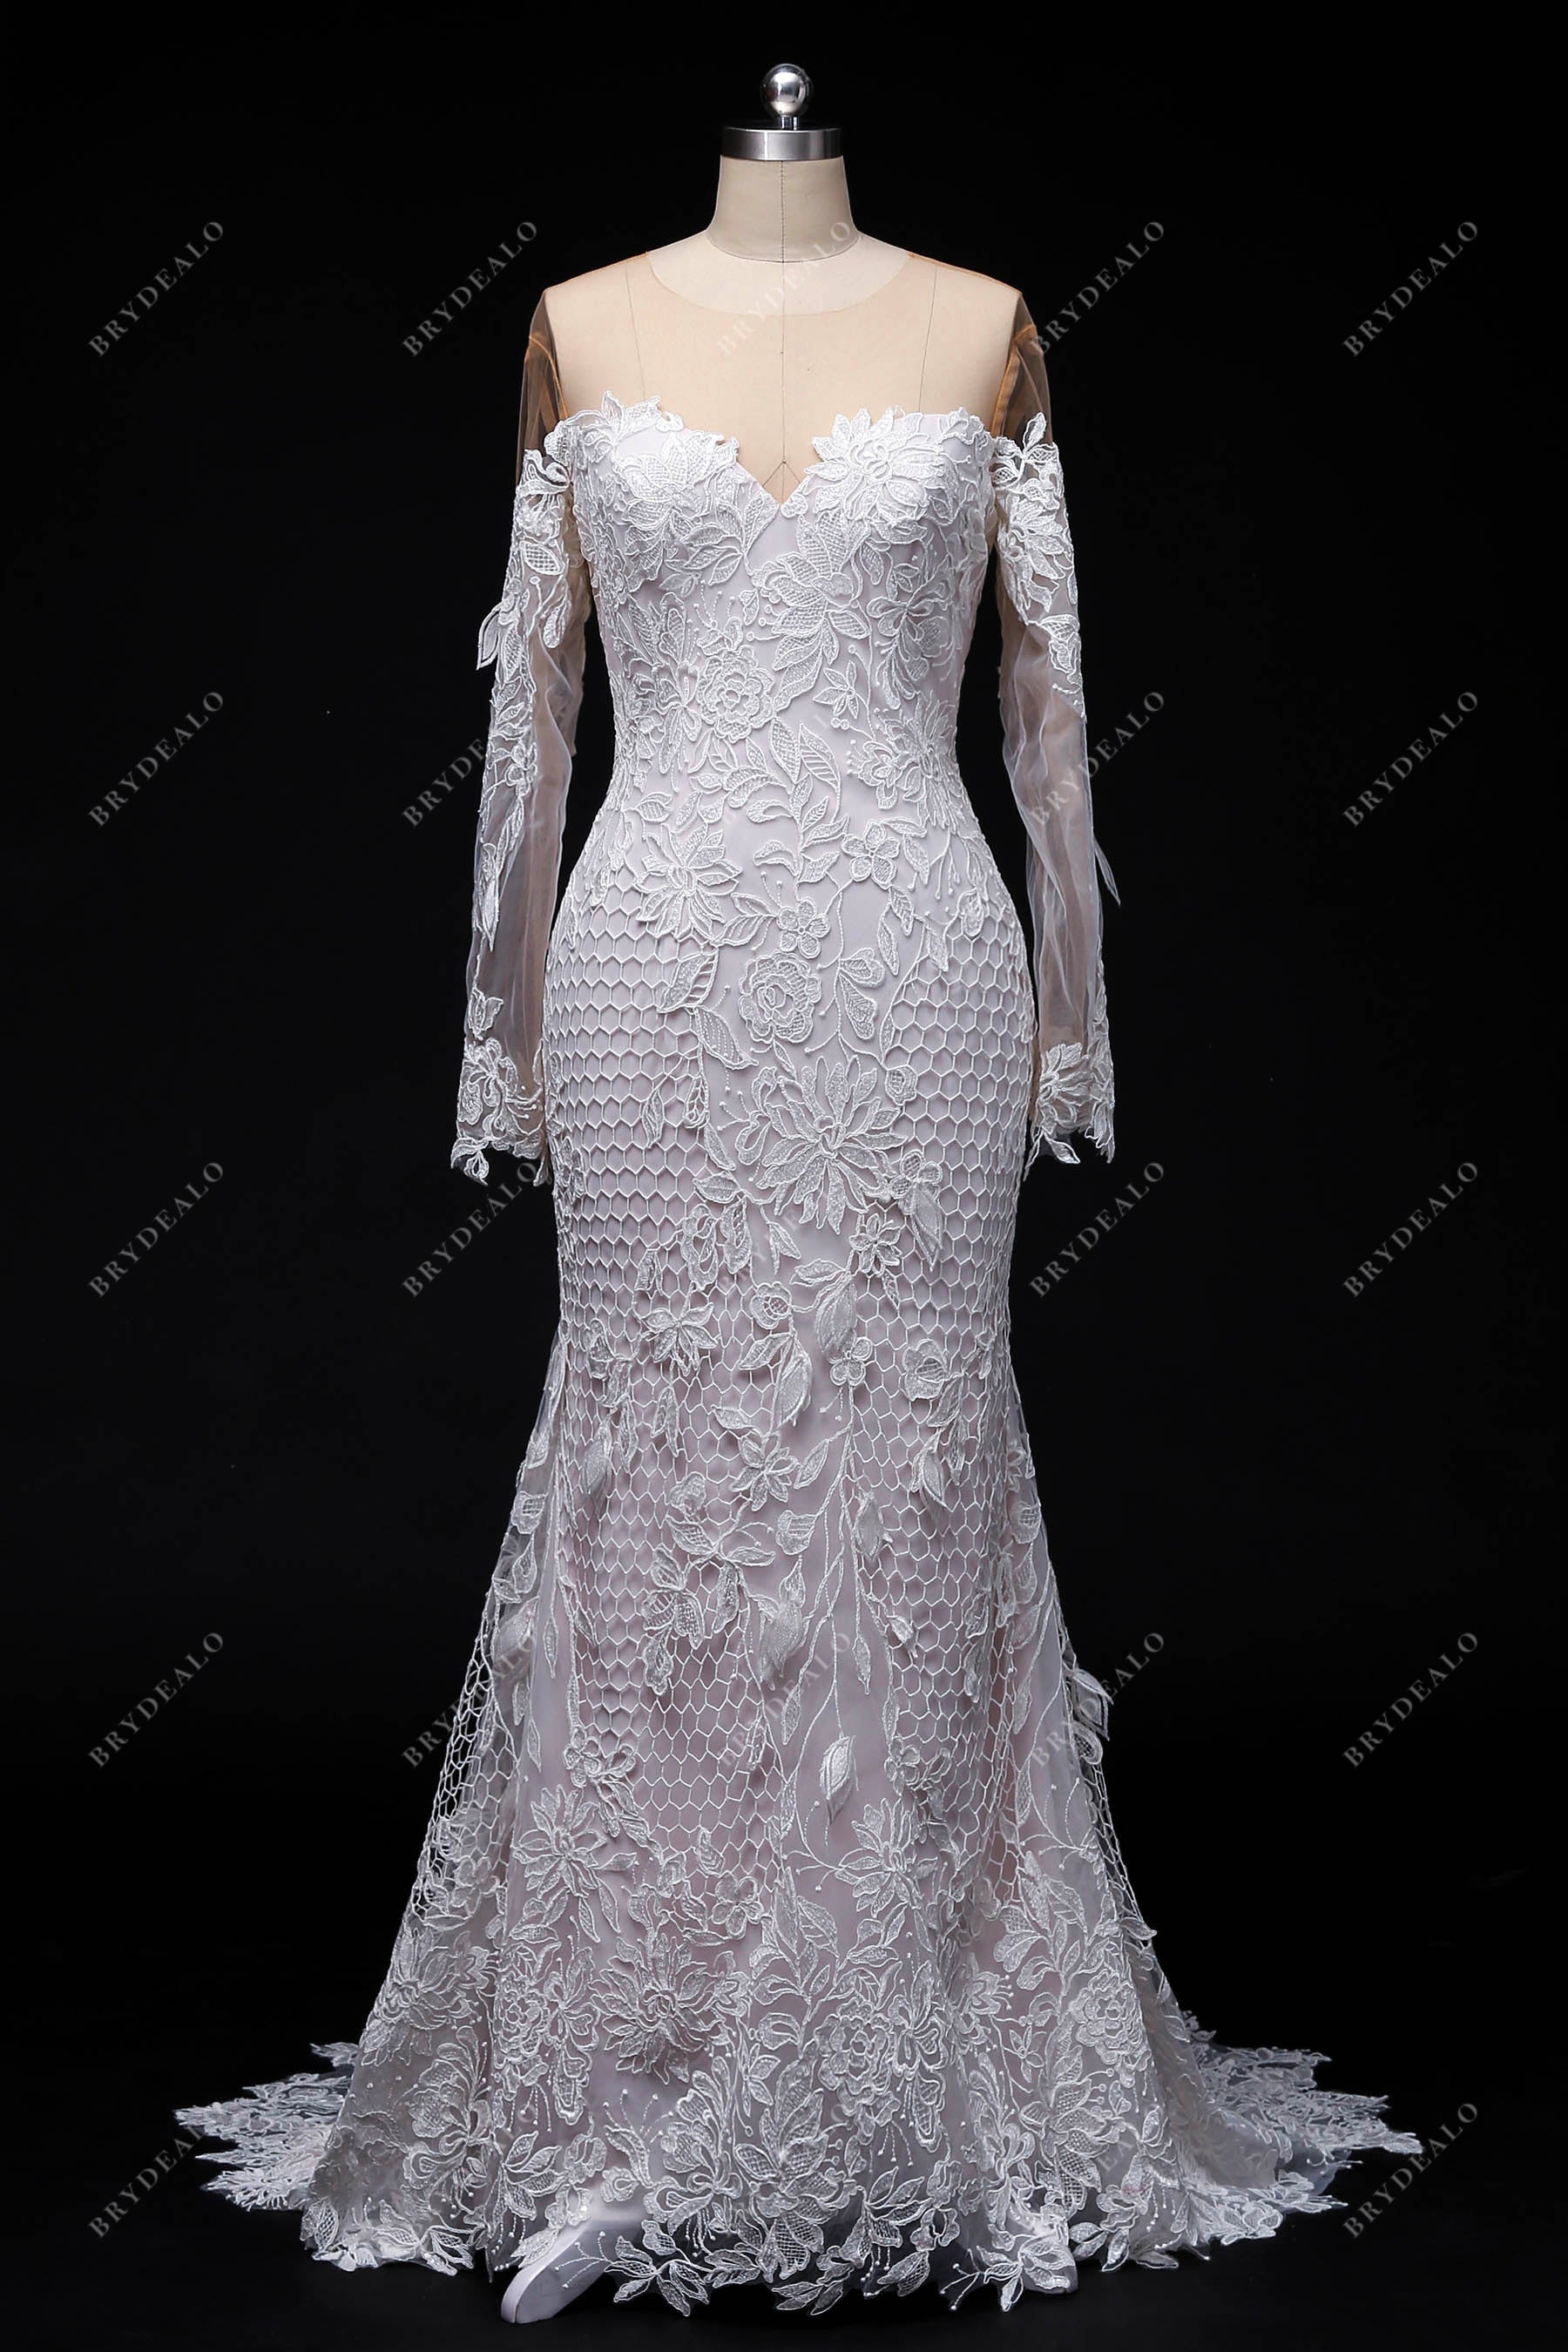 sleeved plant lace mermaid wedding dress